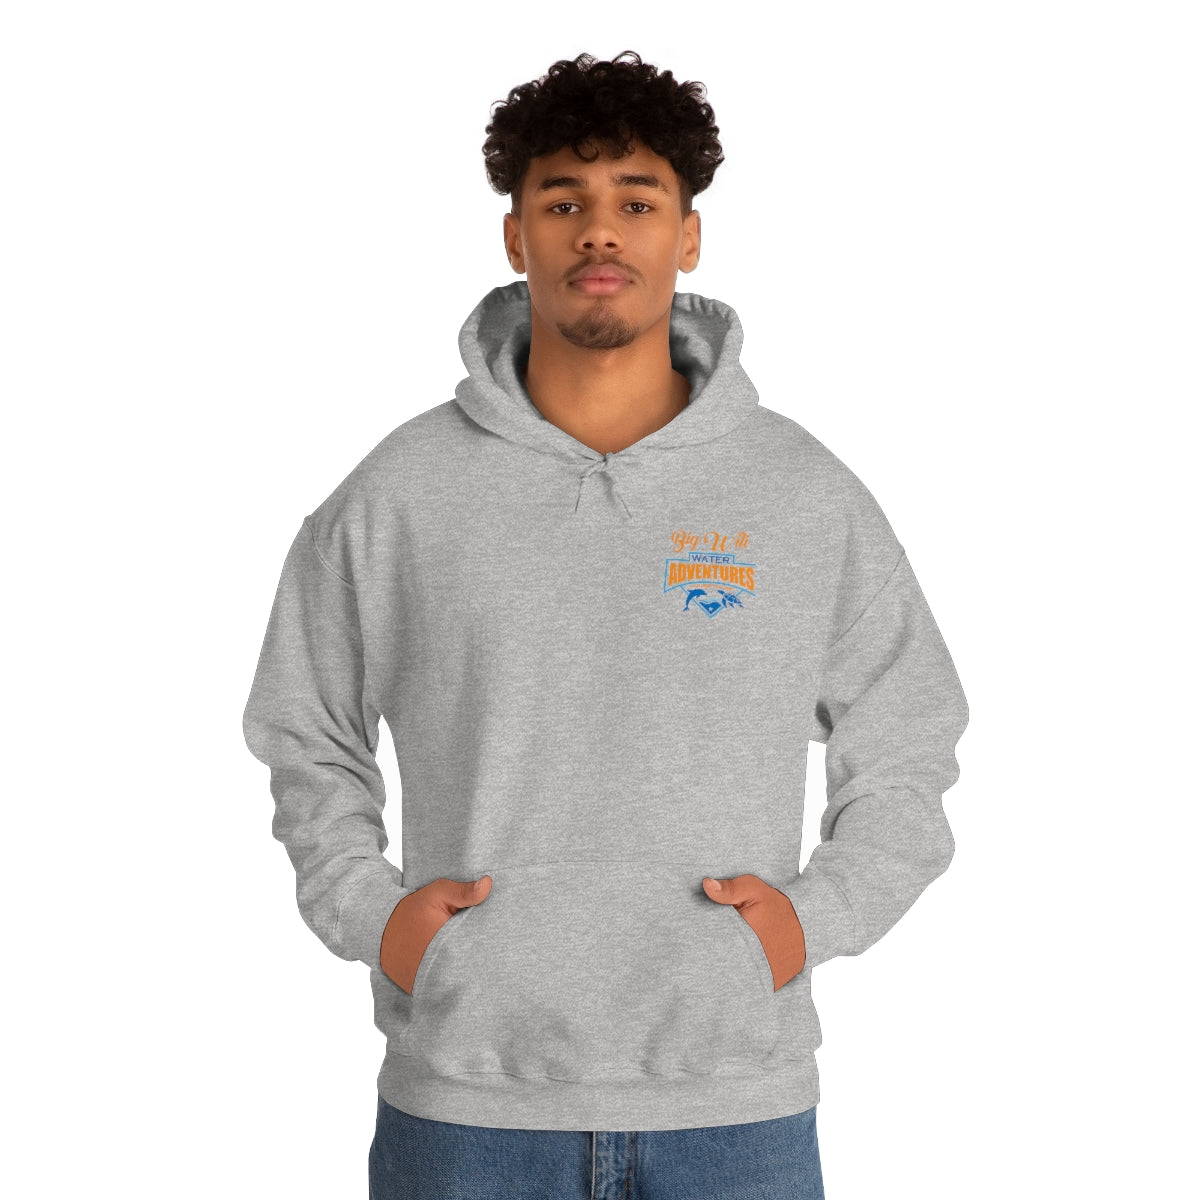 Unisex Heavy Blend™ Hooded Sweatshirt 3 Color Choices, Anna Maria Island, Every Place Else Sucks Shirt